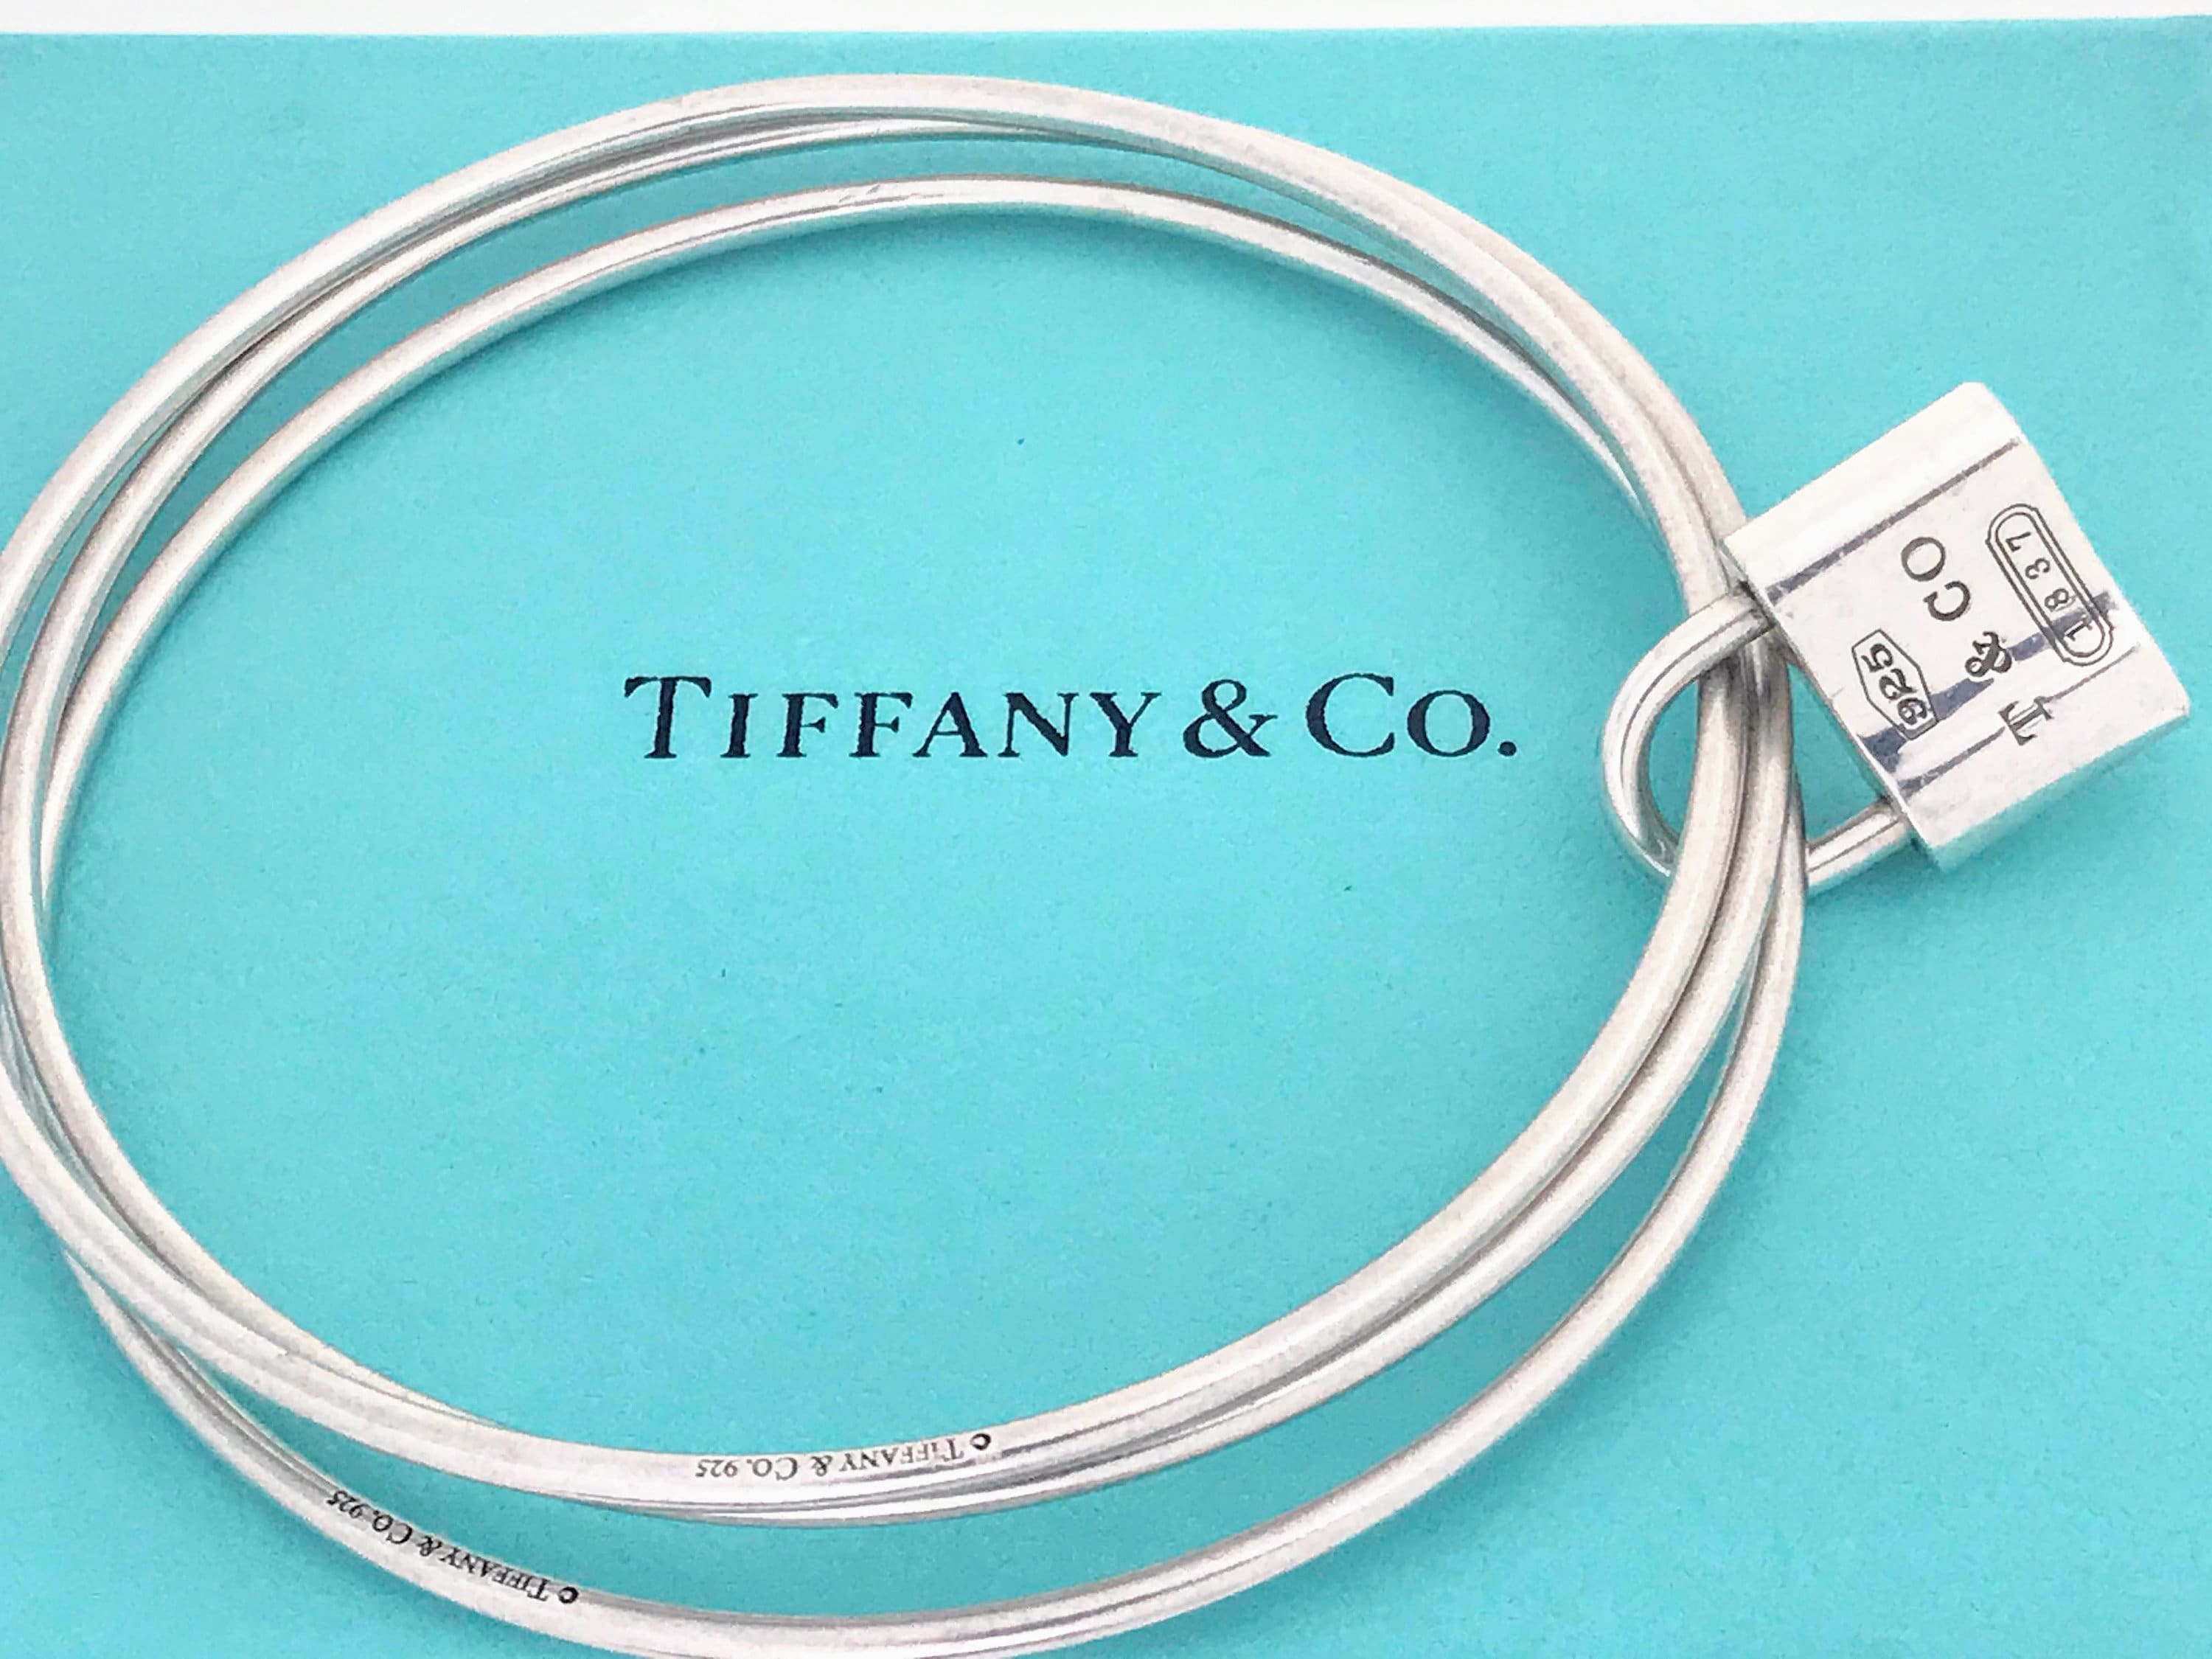 Vintage Tiffany & Co. 1837 Padlock Charm Bracelet